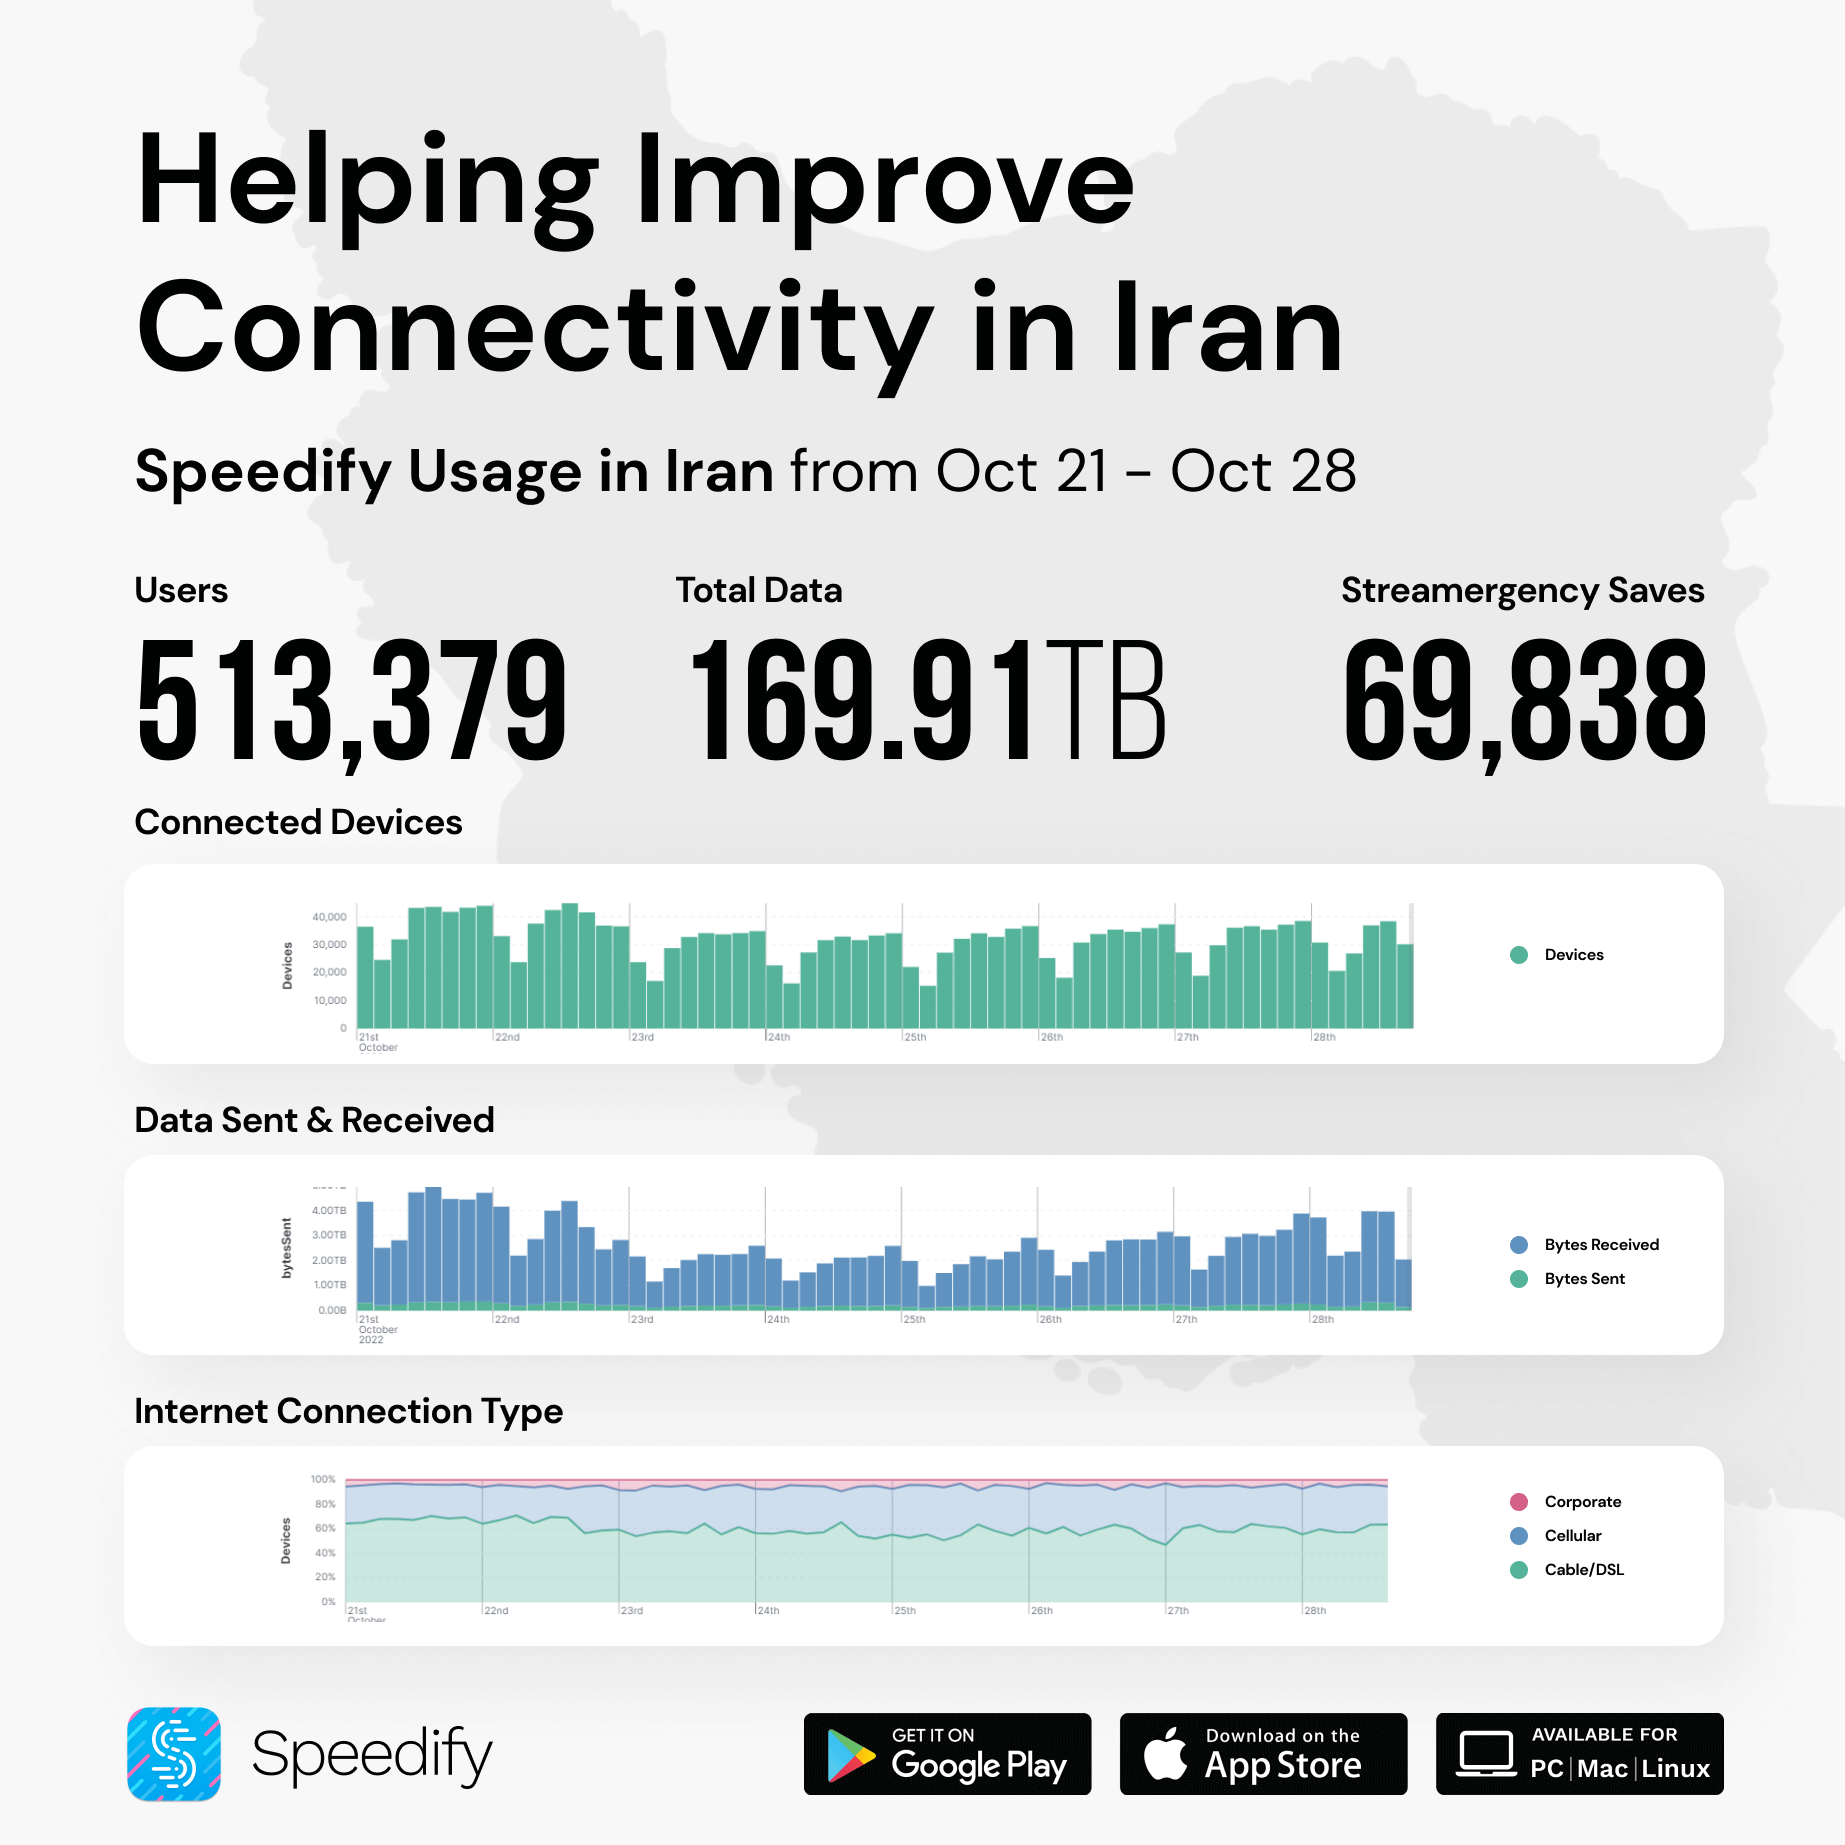 Oct 28 - Iran Internet usage for Speedify users